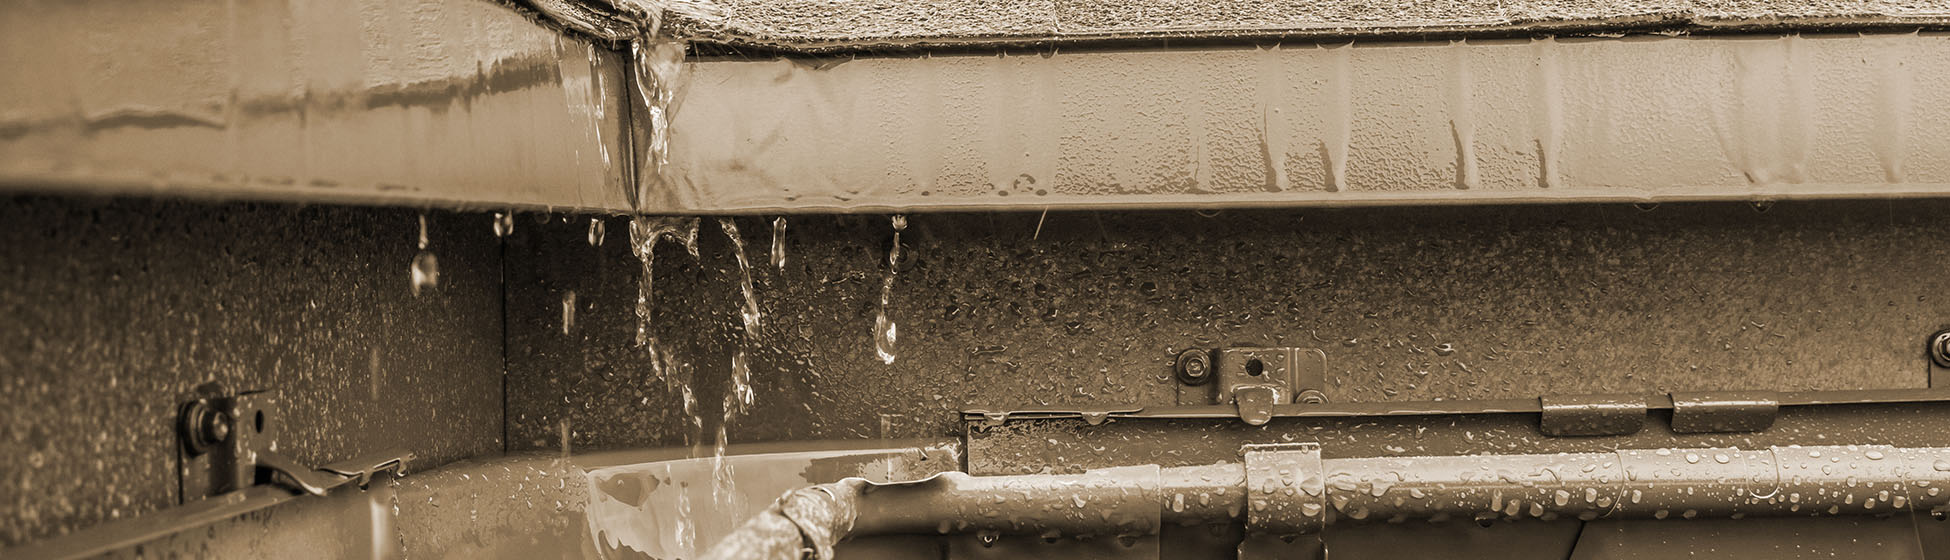 Installation systeme recuperation eau de pluie